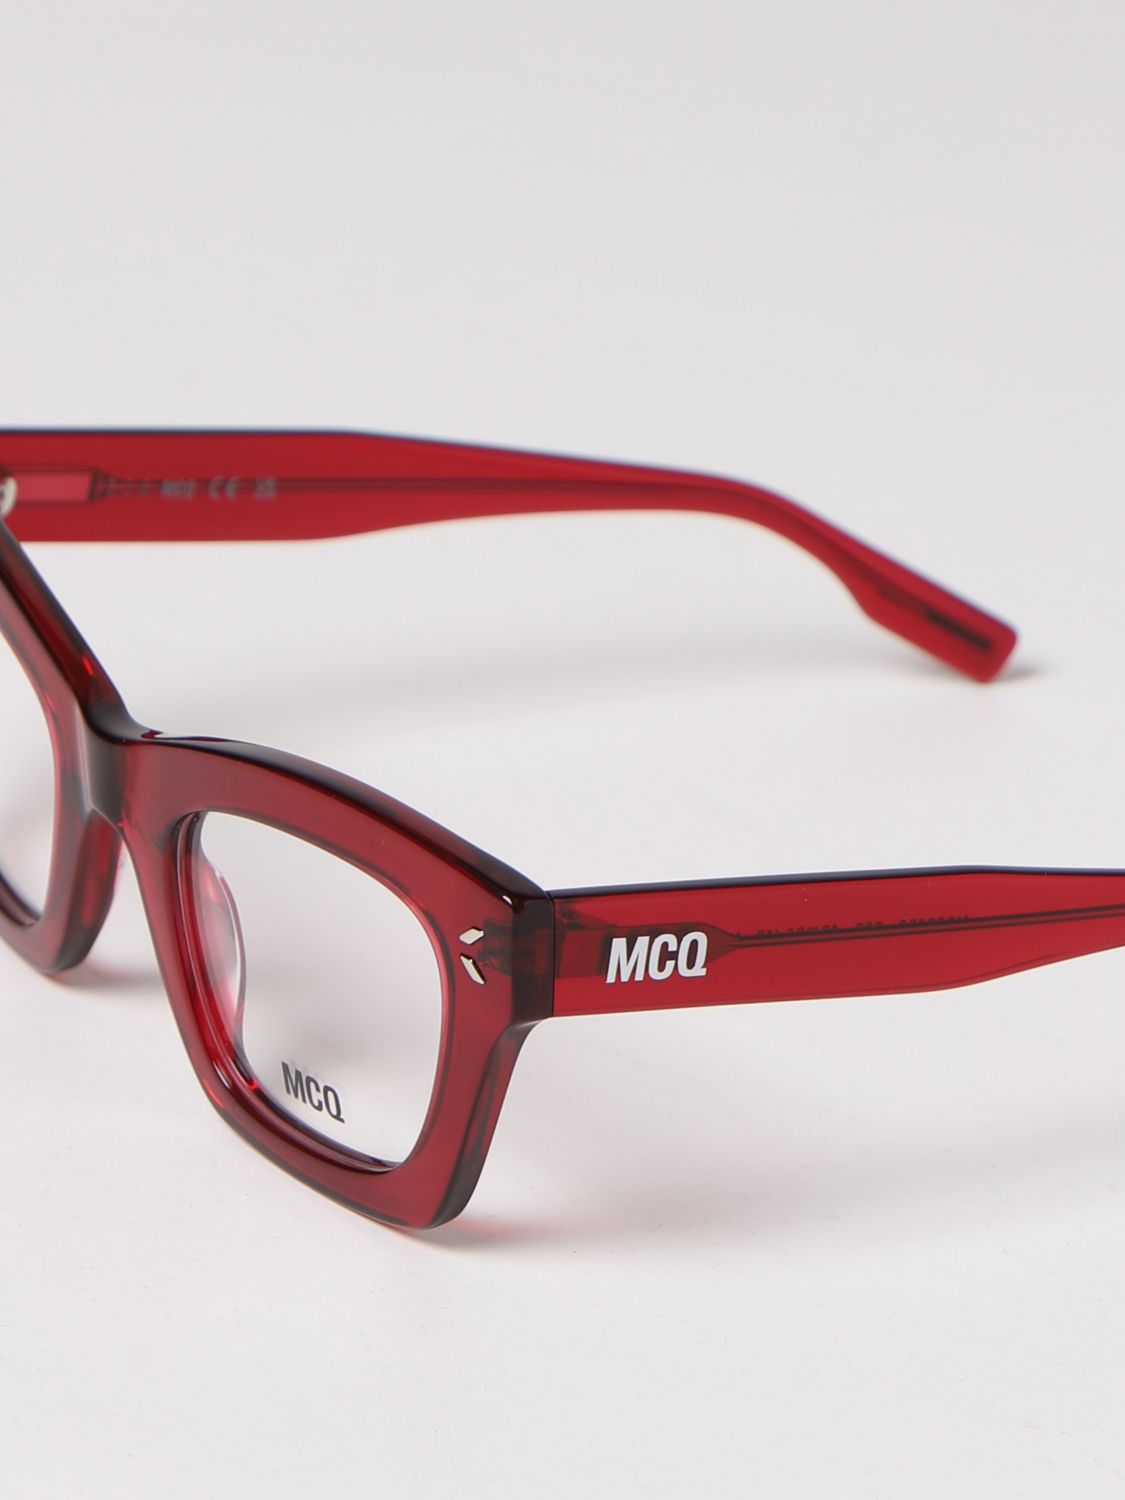 Sunglasses Mcq: Mcq sunglasses for woman burgundy 4